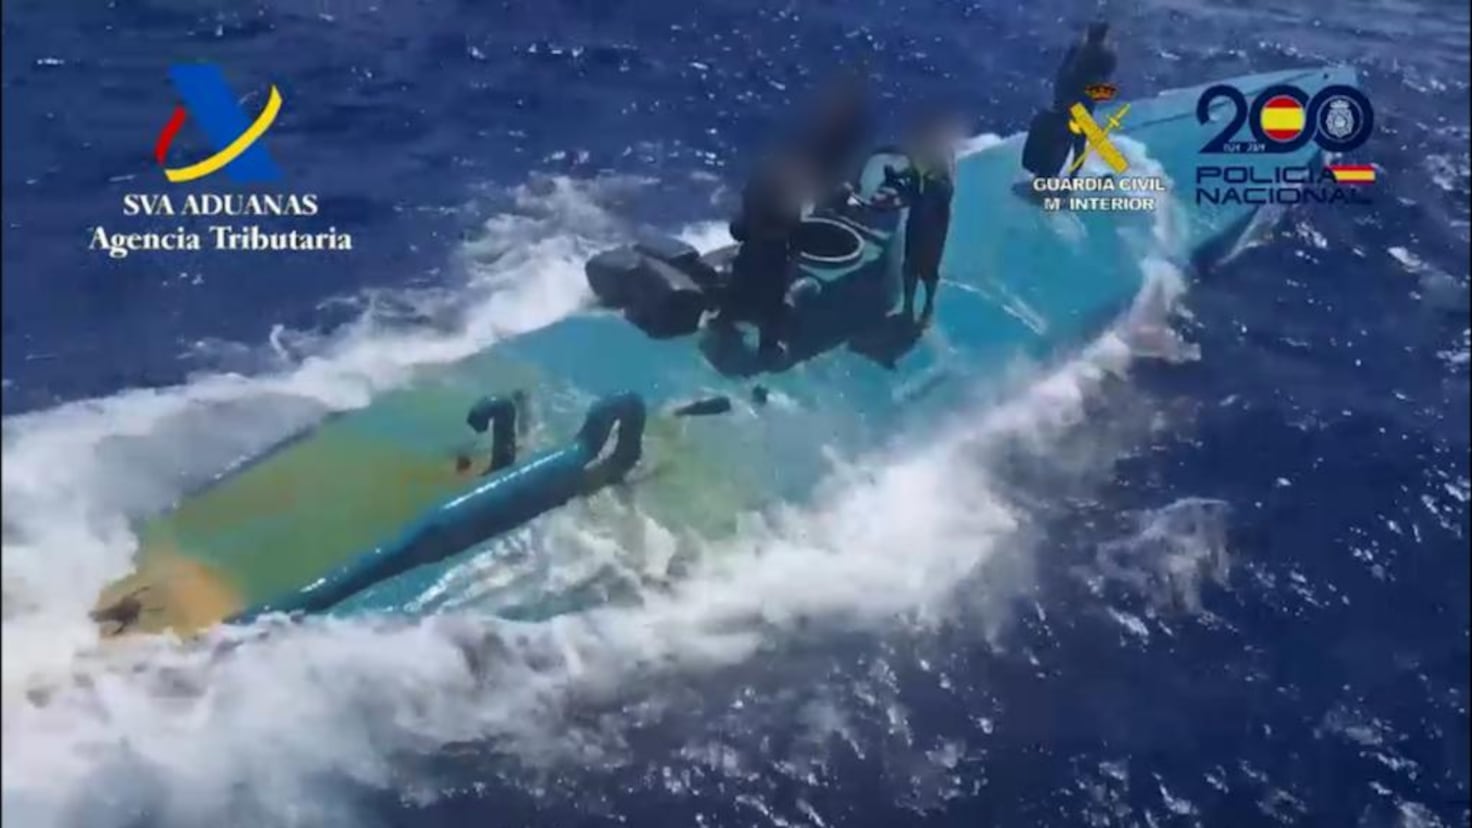 The Civil Guard intercepts a drug submarine in the Atlantic